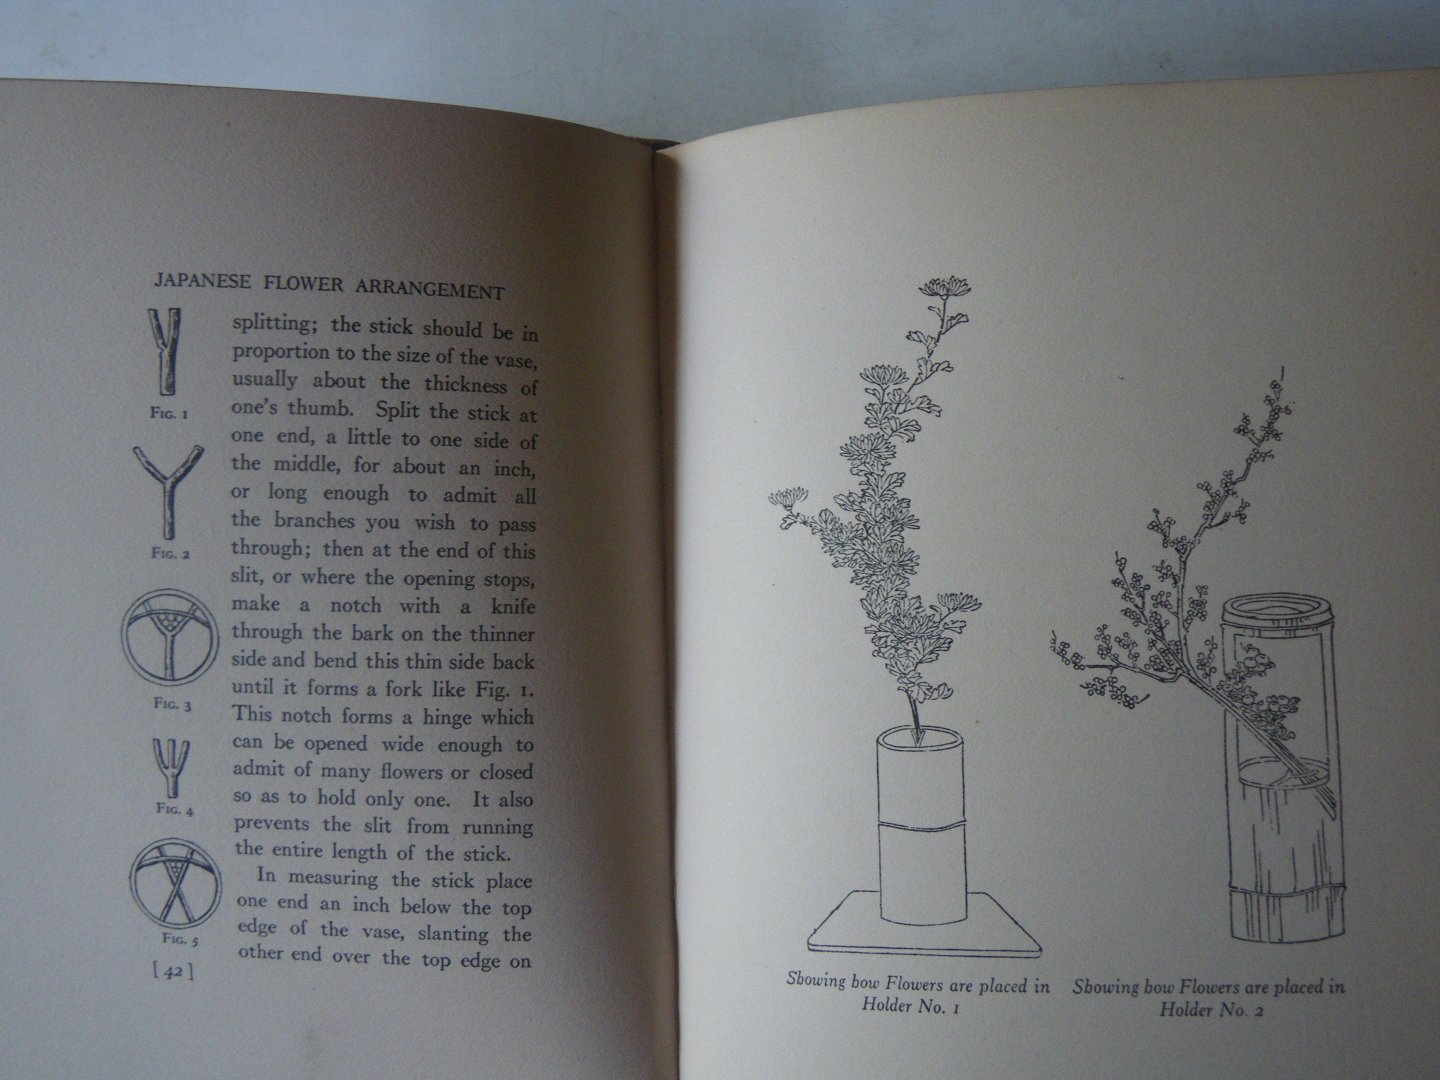 Averill Mary, - Japanese Flower Arrangement ( Ike-Bana ), applied to western needs